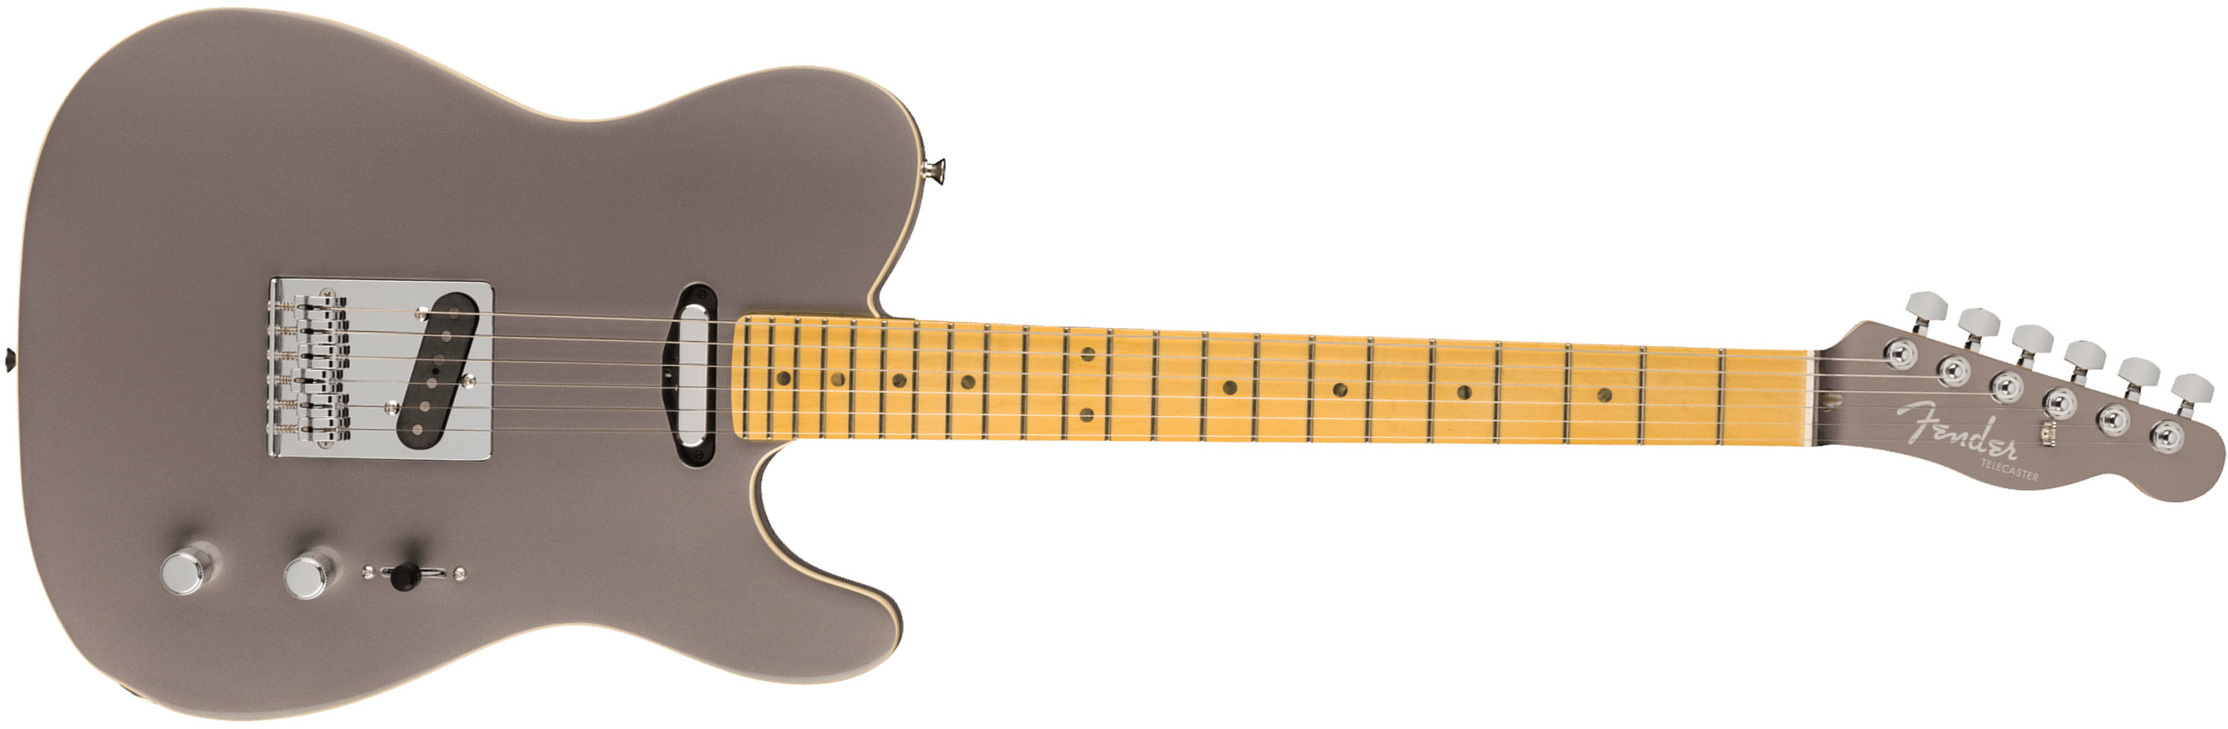 Fender Tele Aerodyne Special Jap 2s Ht Mn - Dolphin Gray Metallic - Tel shape electric guitar - Main picture